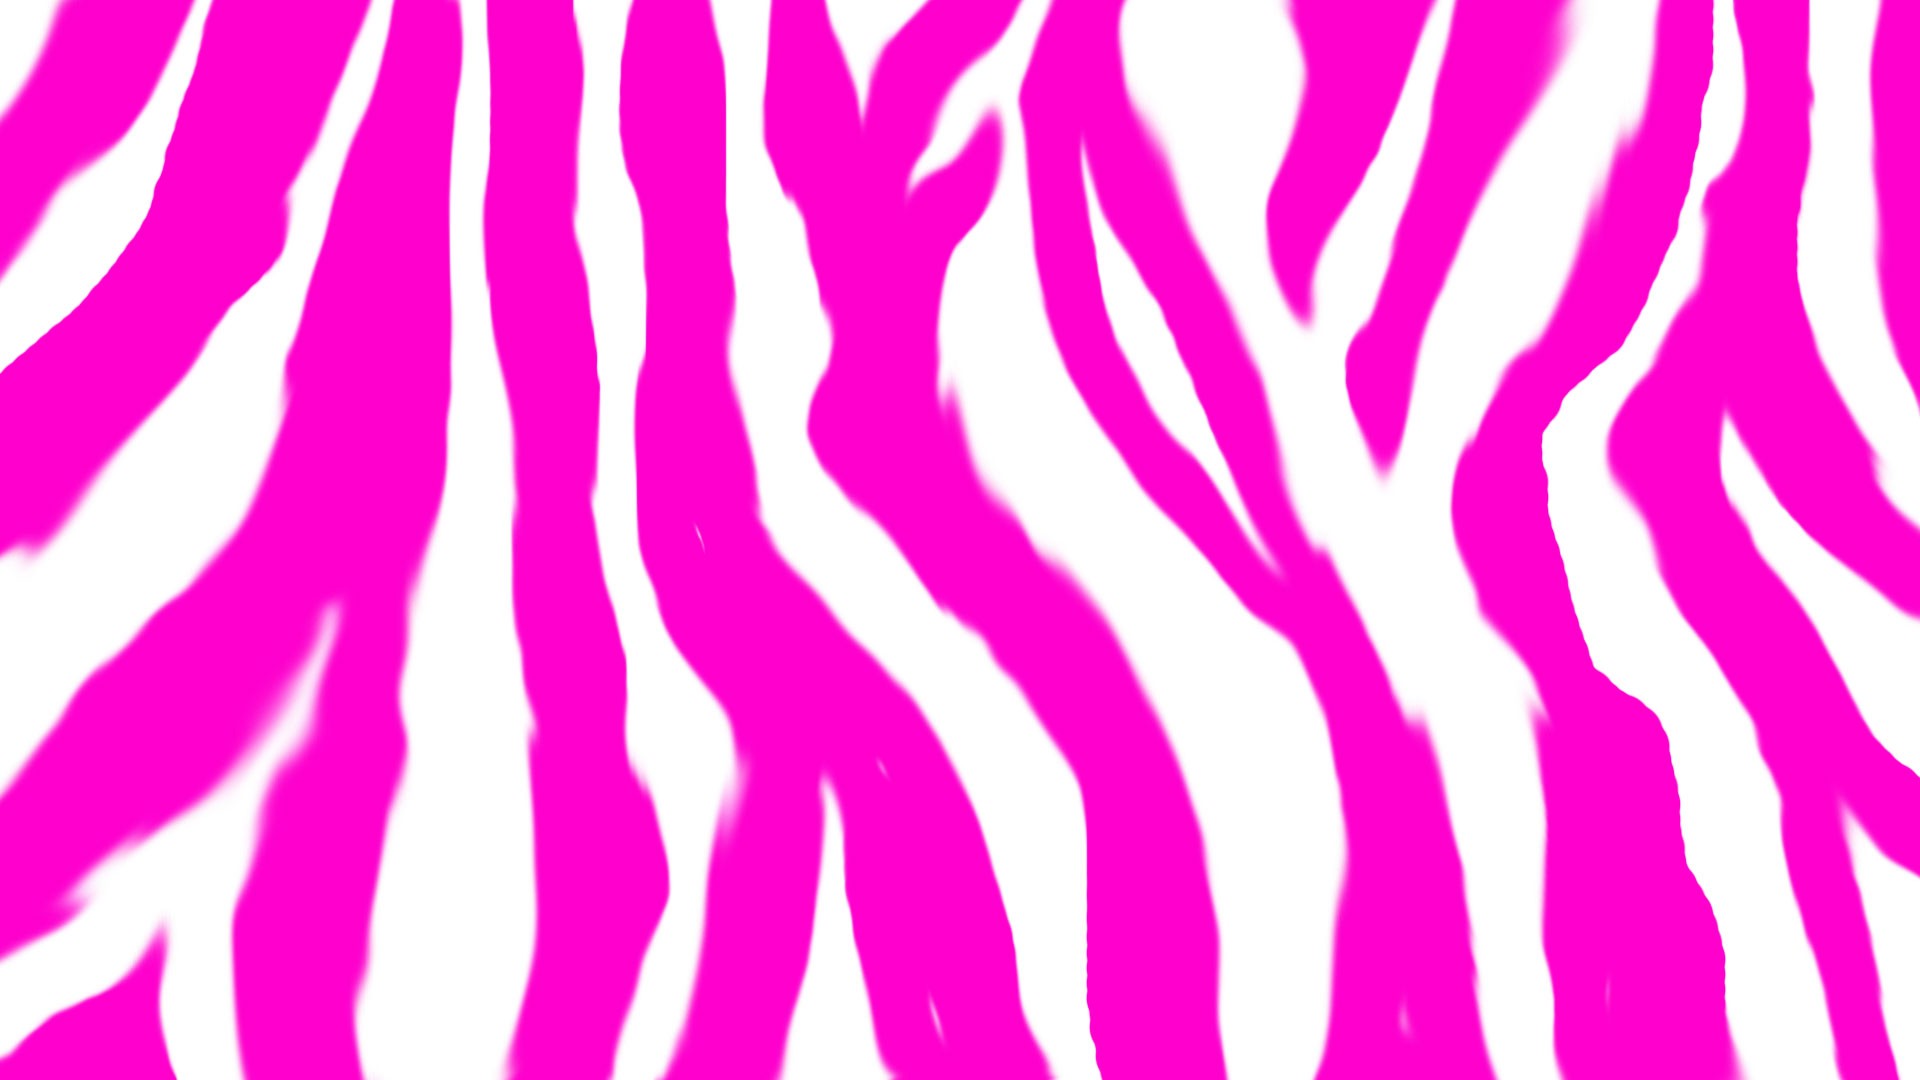 pink zebra print wallpaper